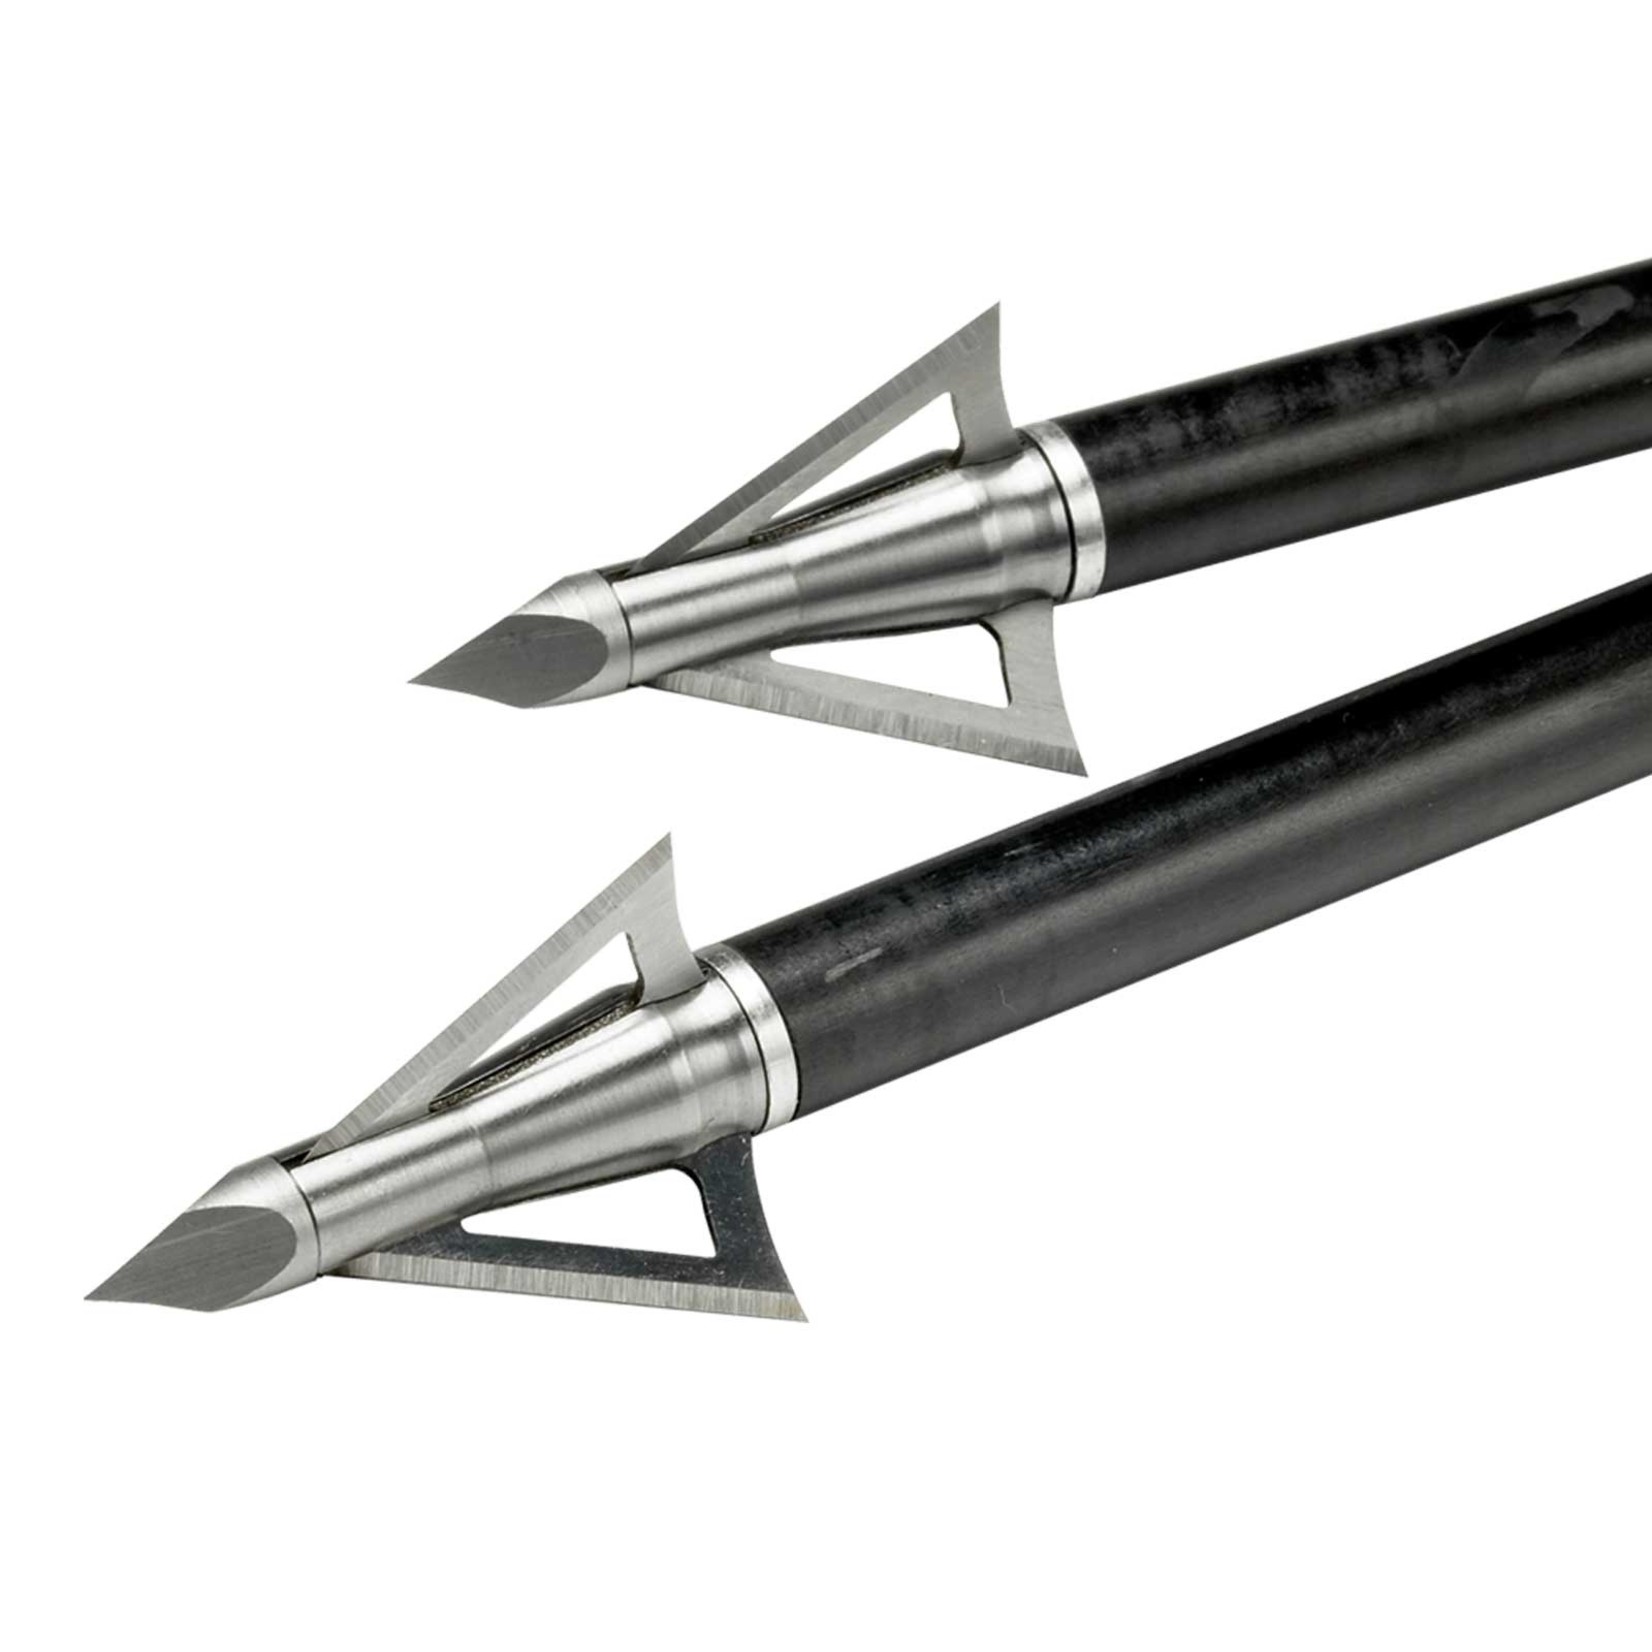 Excalibur Boltcutter Broadhead - 150 Gr. - Sts. 3-Blade, 1 1/16 Diameter (3 Pack)